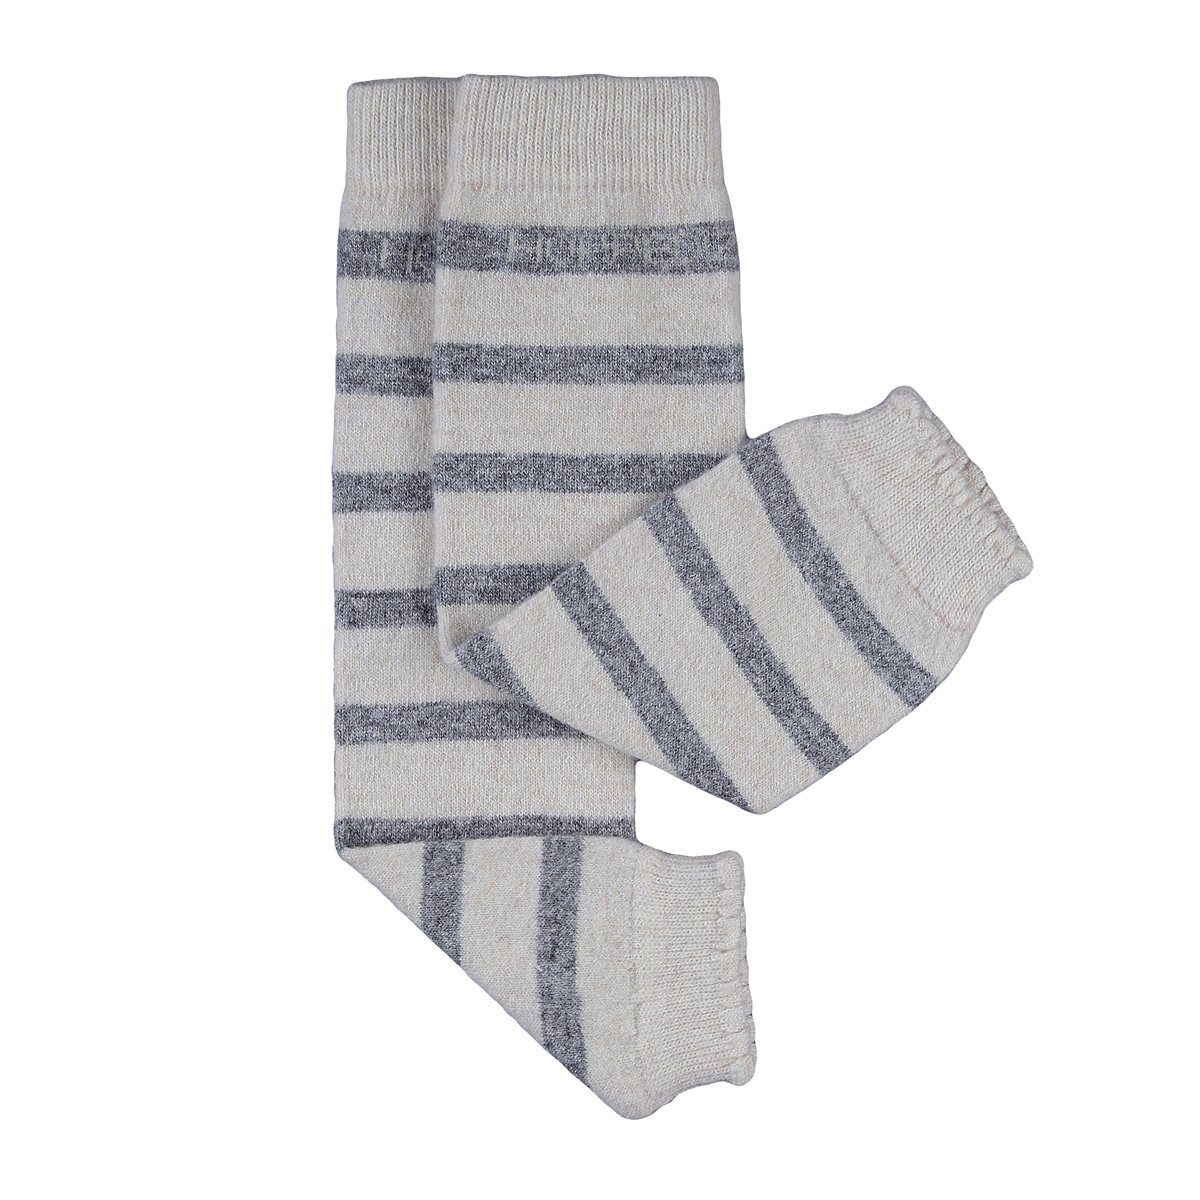 Babystulpen Cashmere / Merino Wool Cream White with Grey Stripes